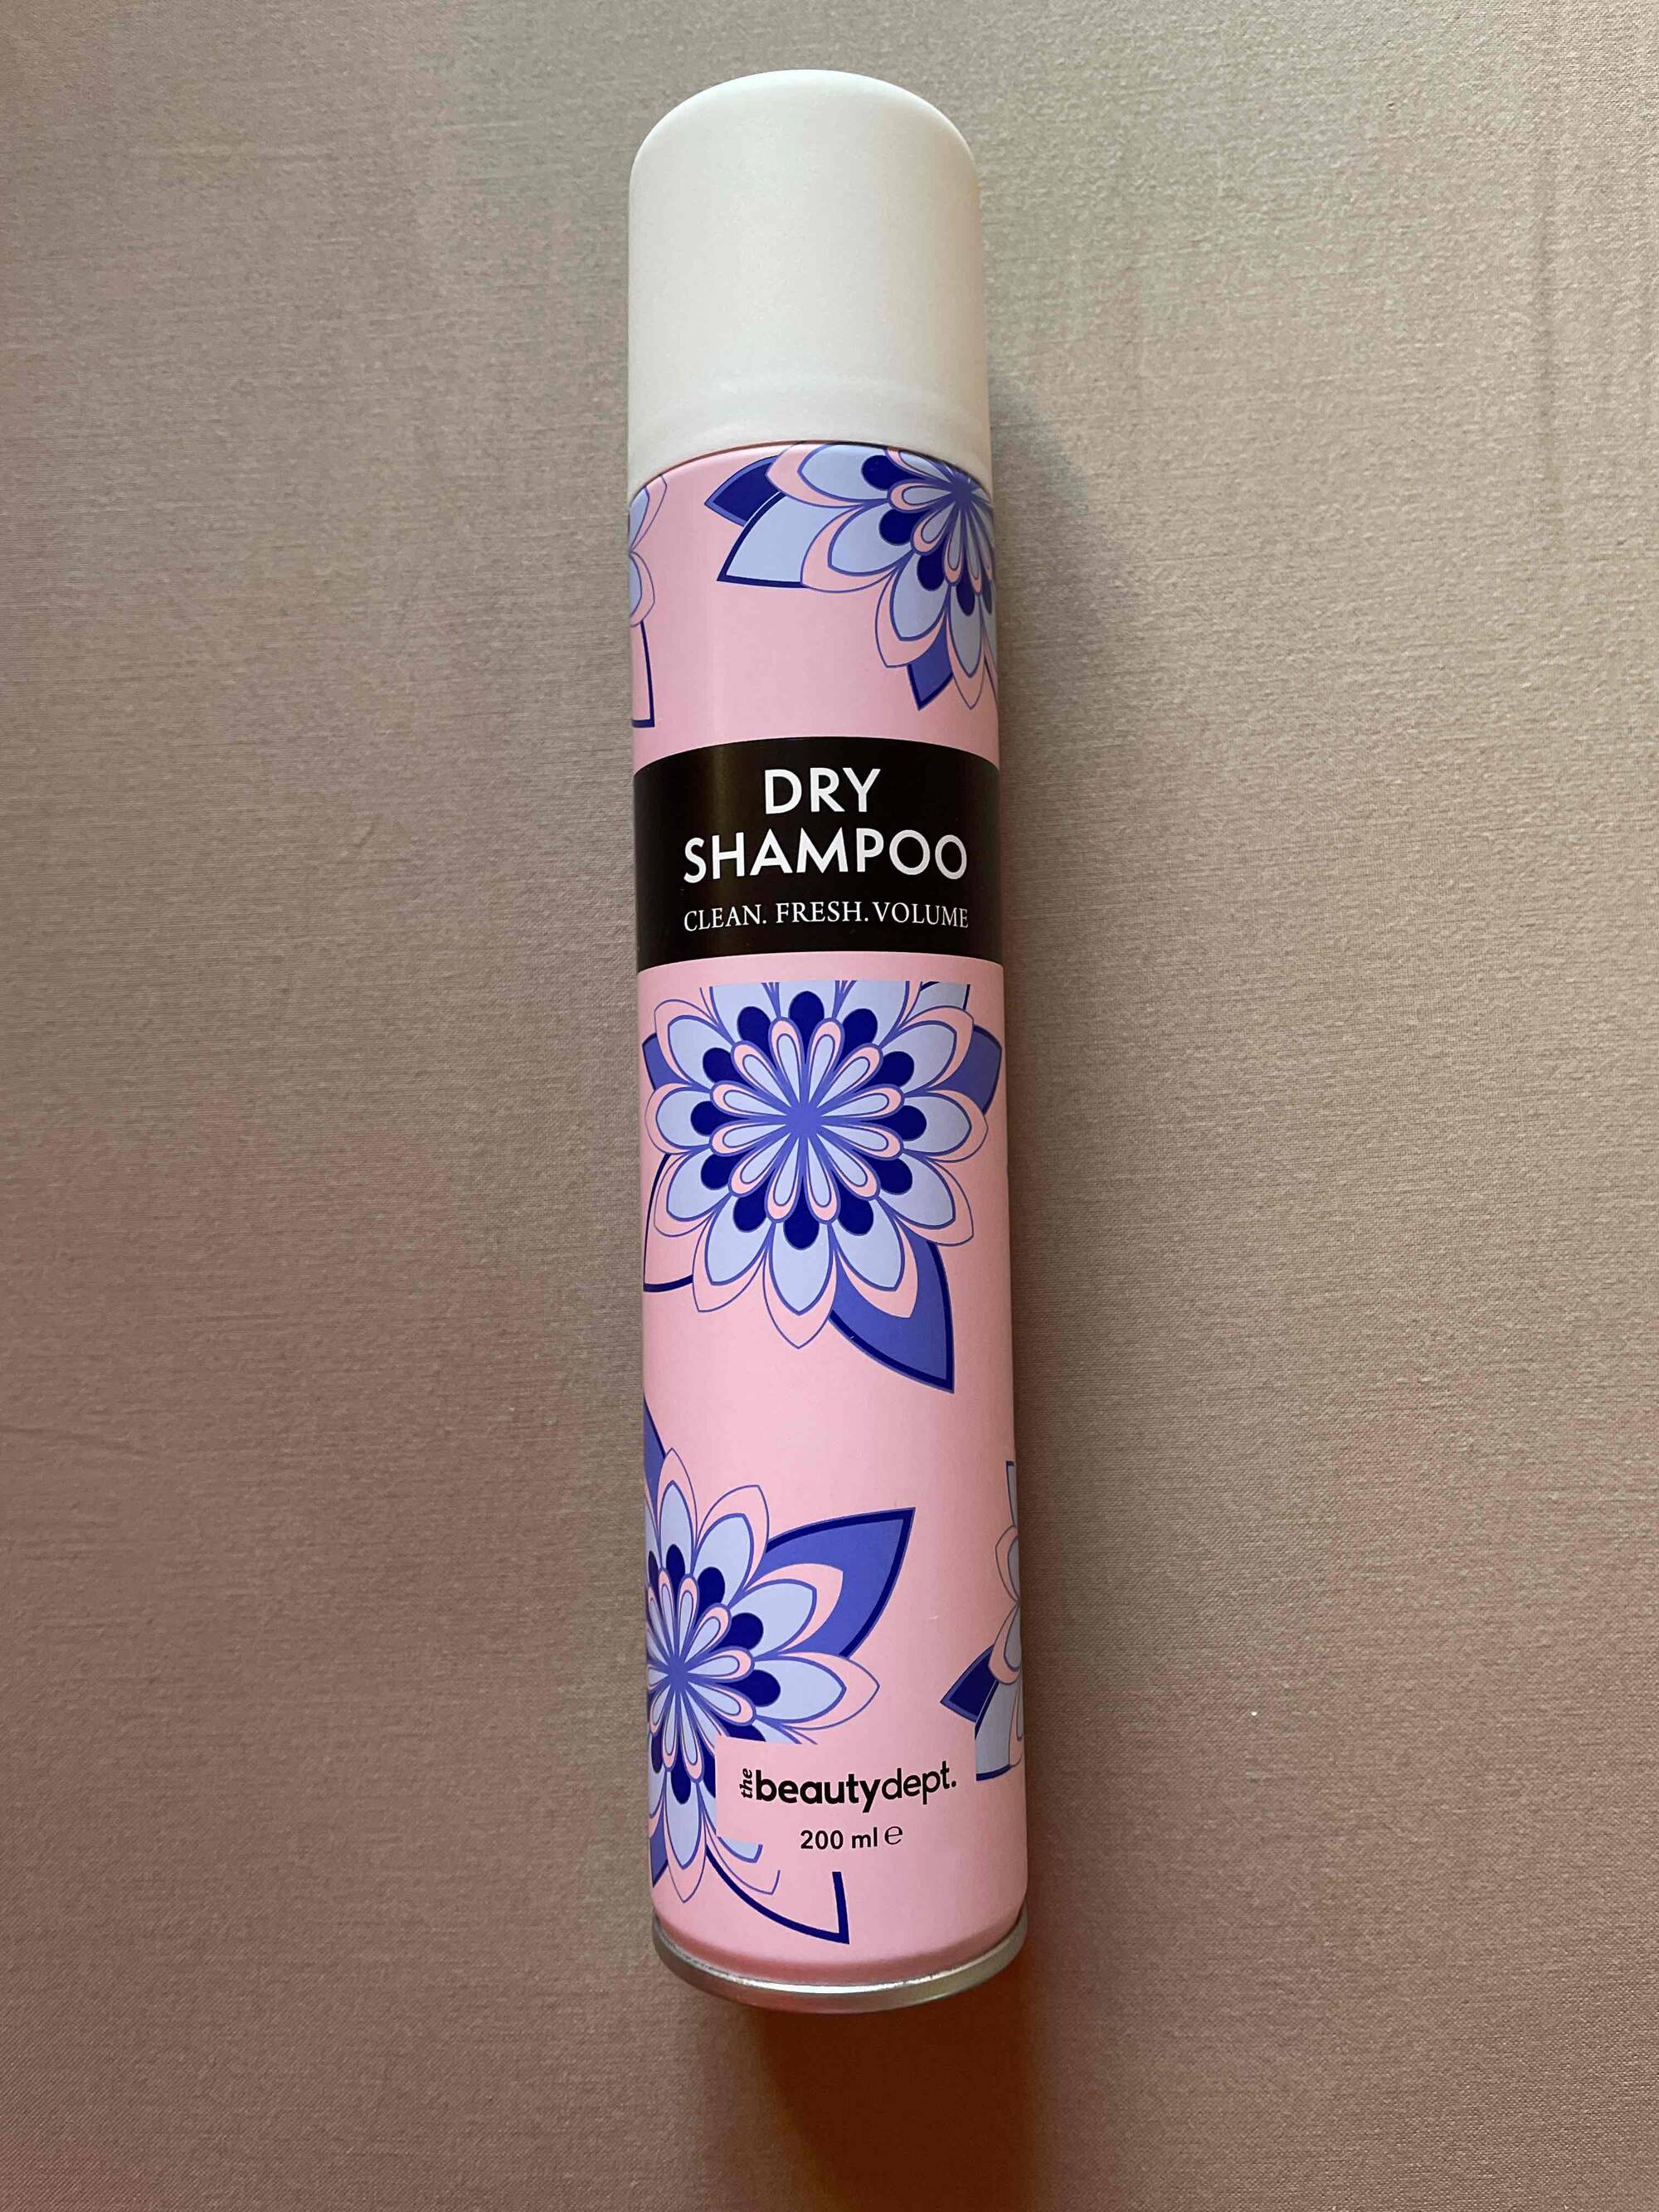 THE BEAUTY DEPT - Dry shampoo clean fresh volume